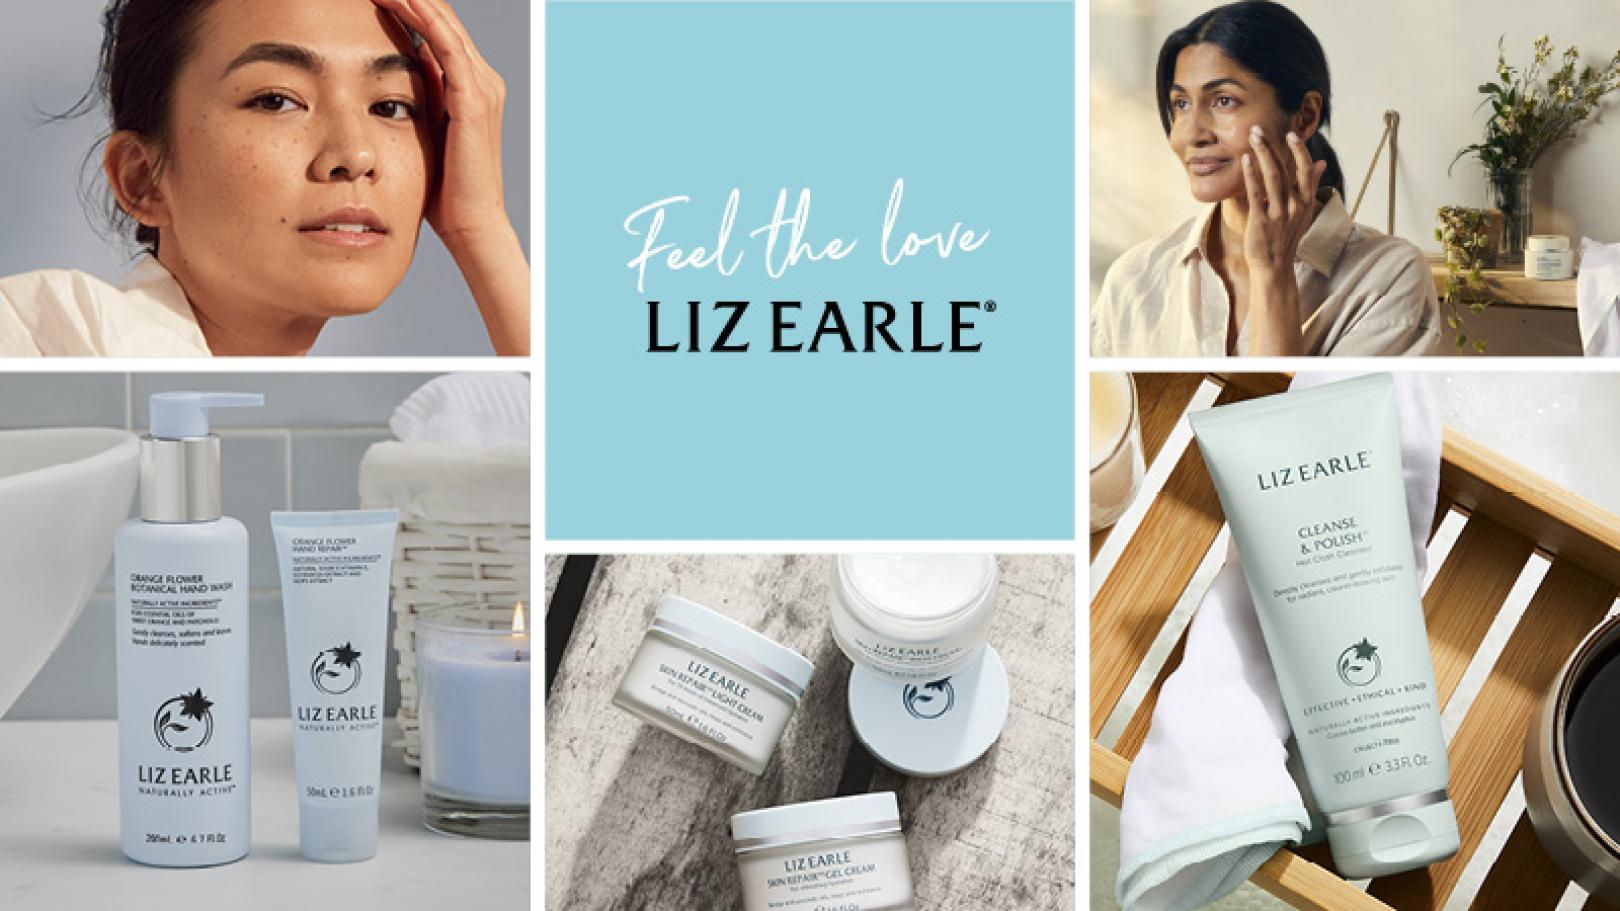 Grid image including Liz Earle logo, models and product shots